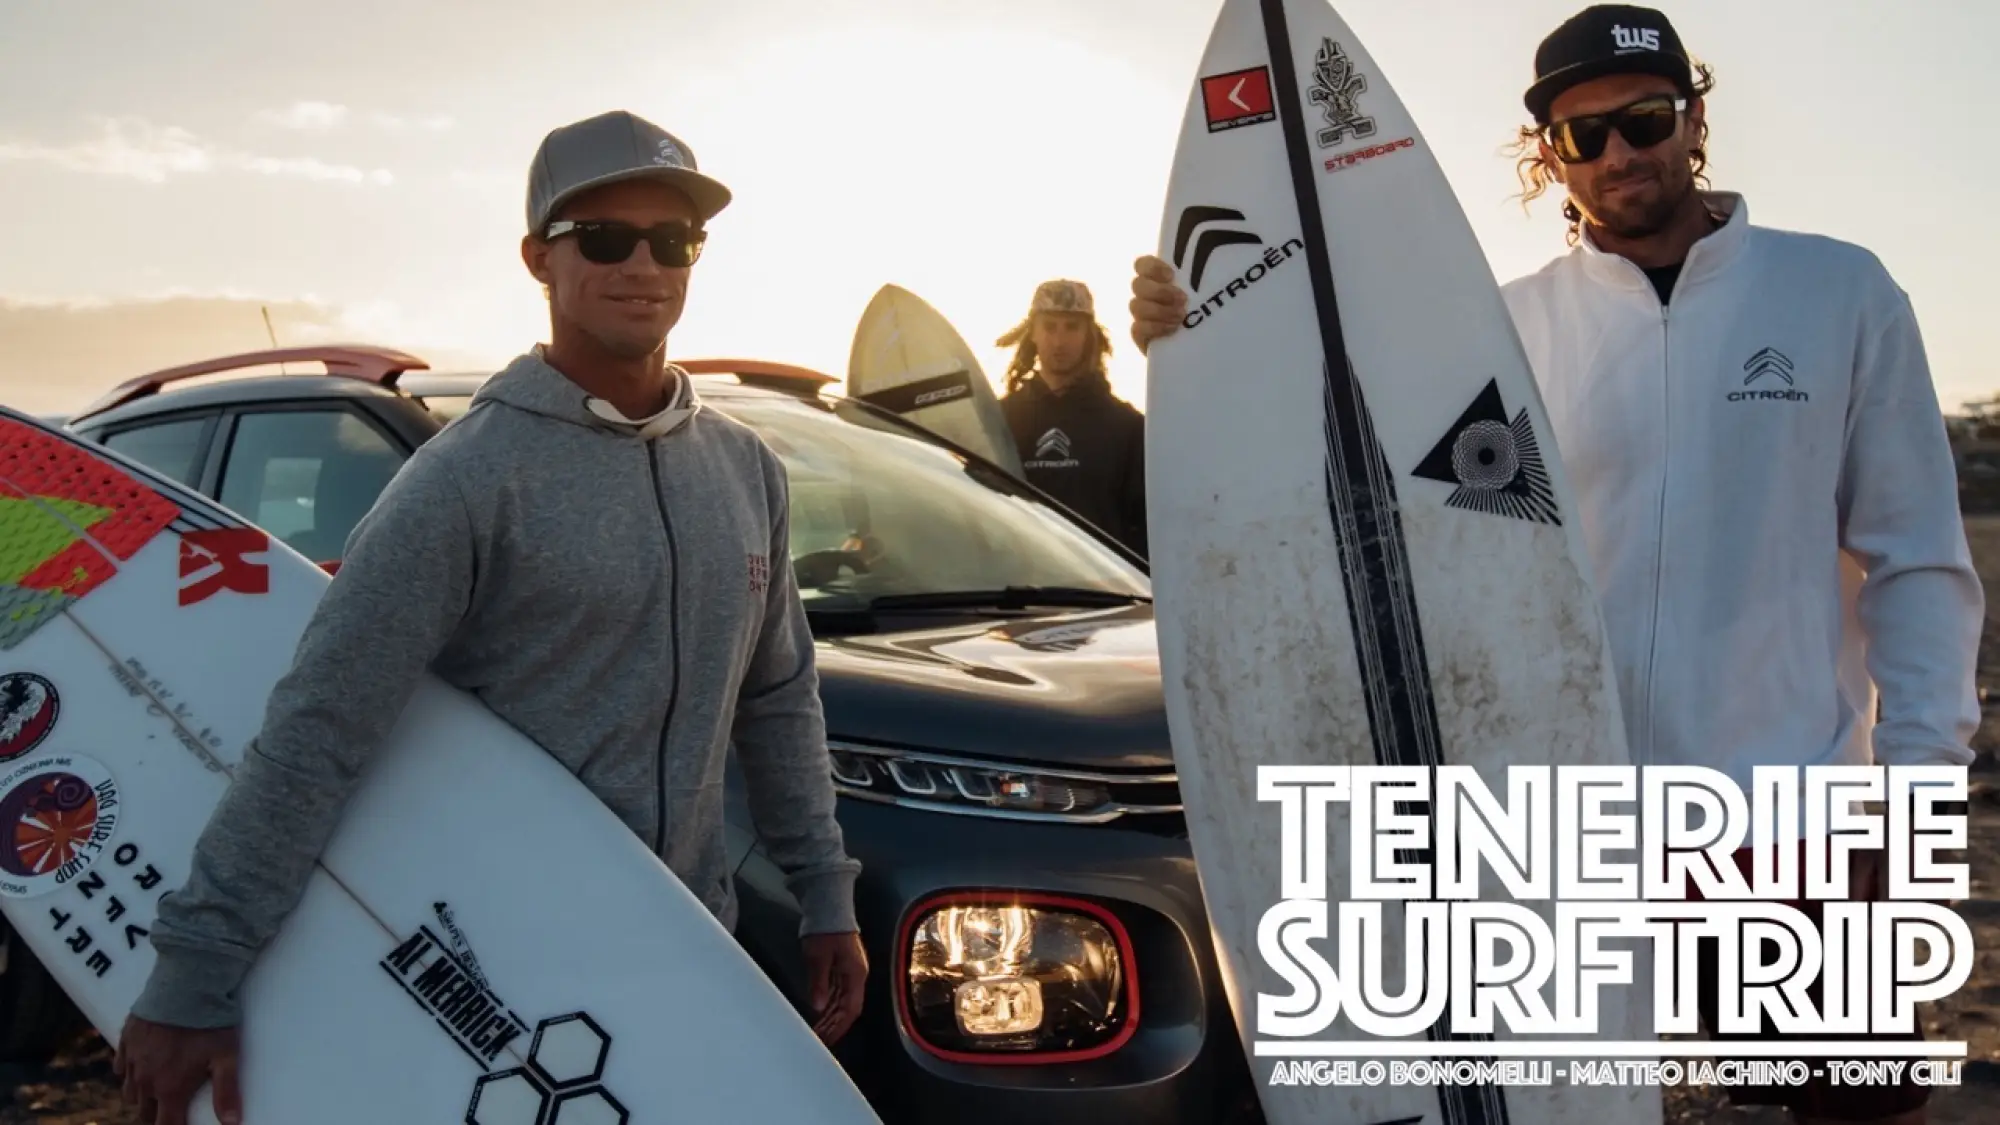 Citroen Unconventional Team 2018 - Surf trip Tenerife - 5